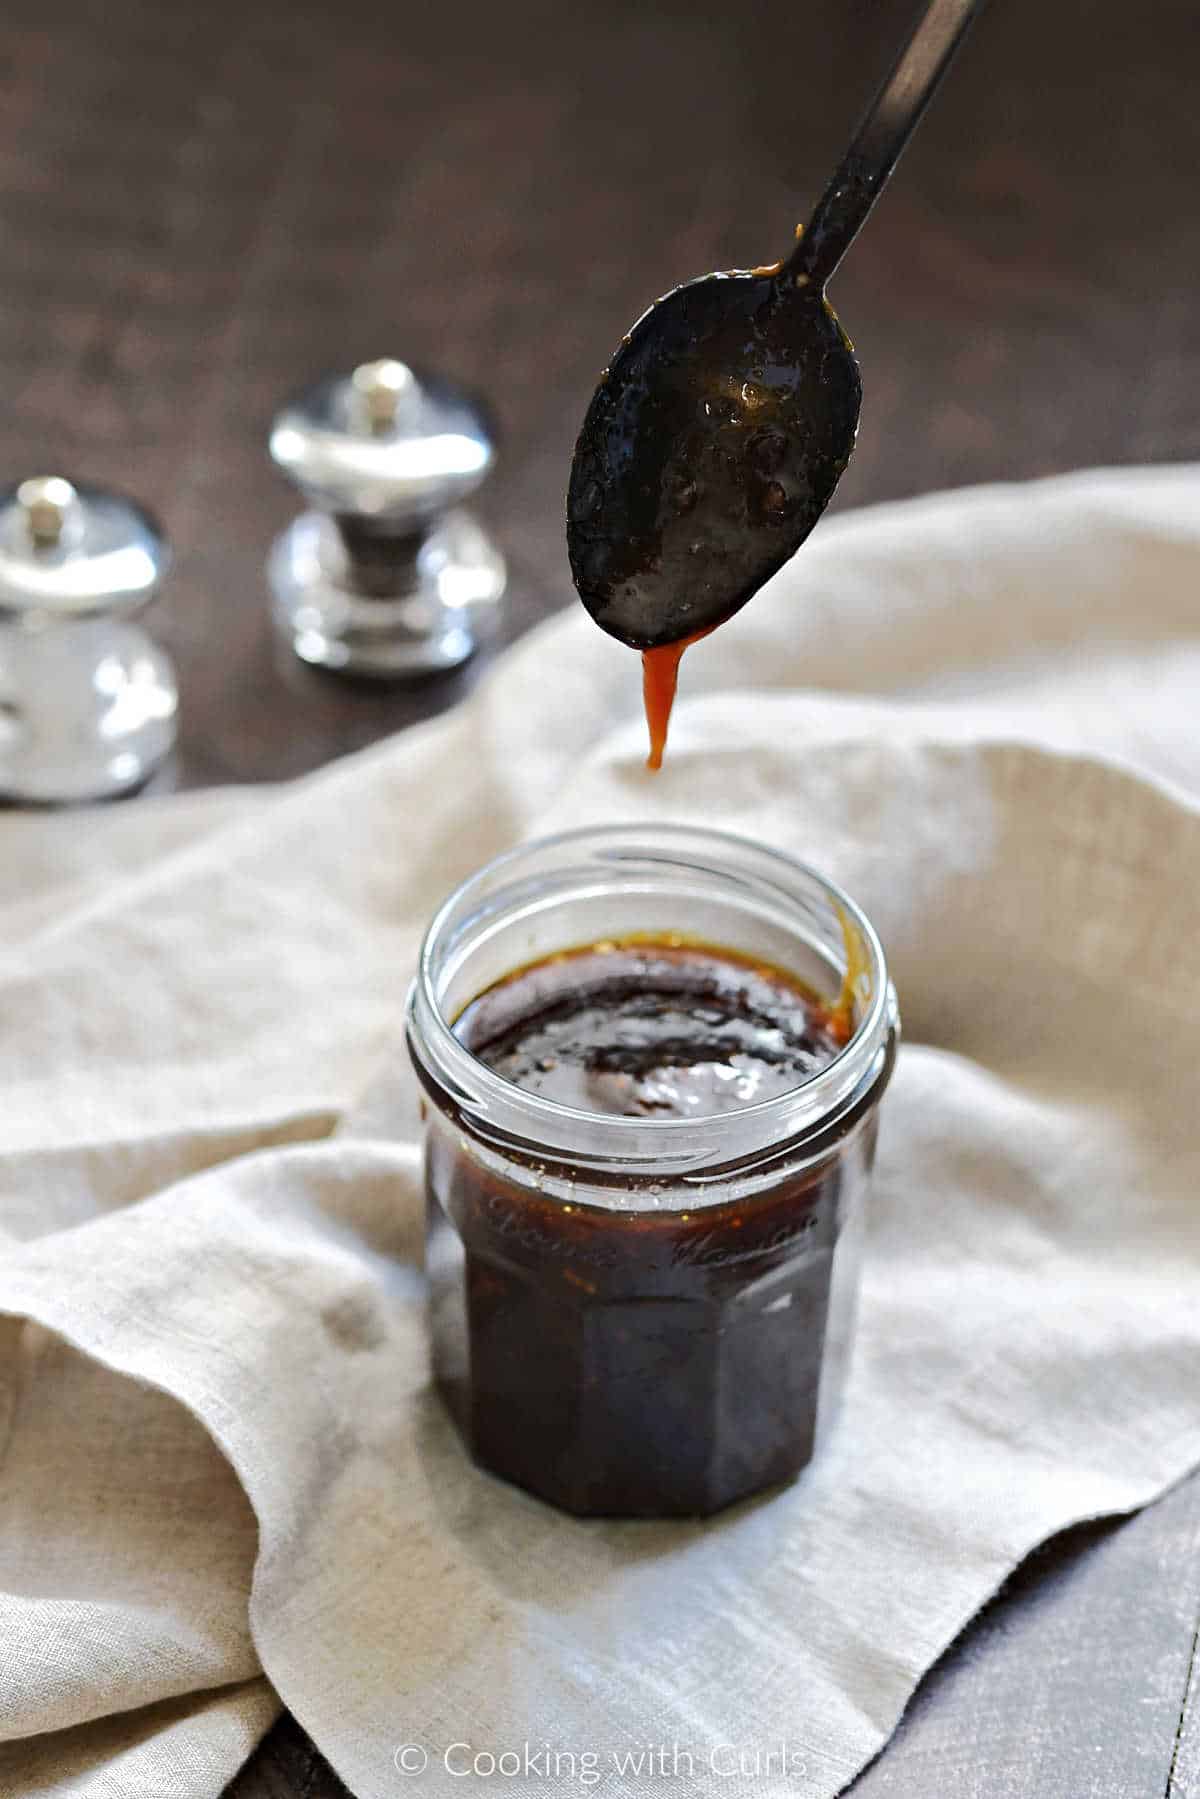 A black spoon dripping teriyaki sauce down into a glass jar of sauce.